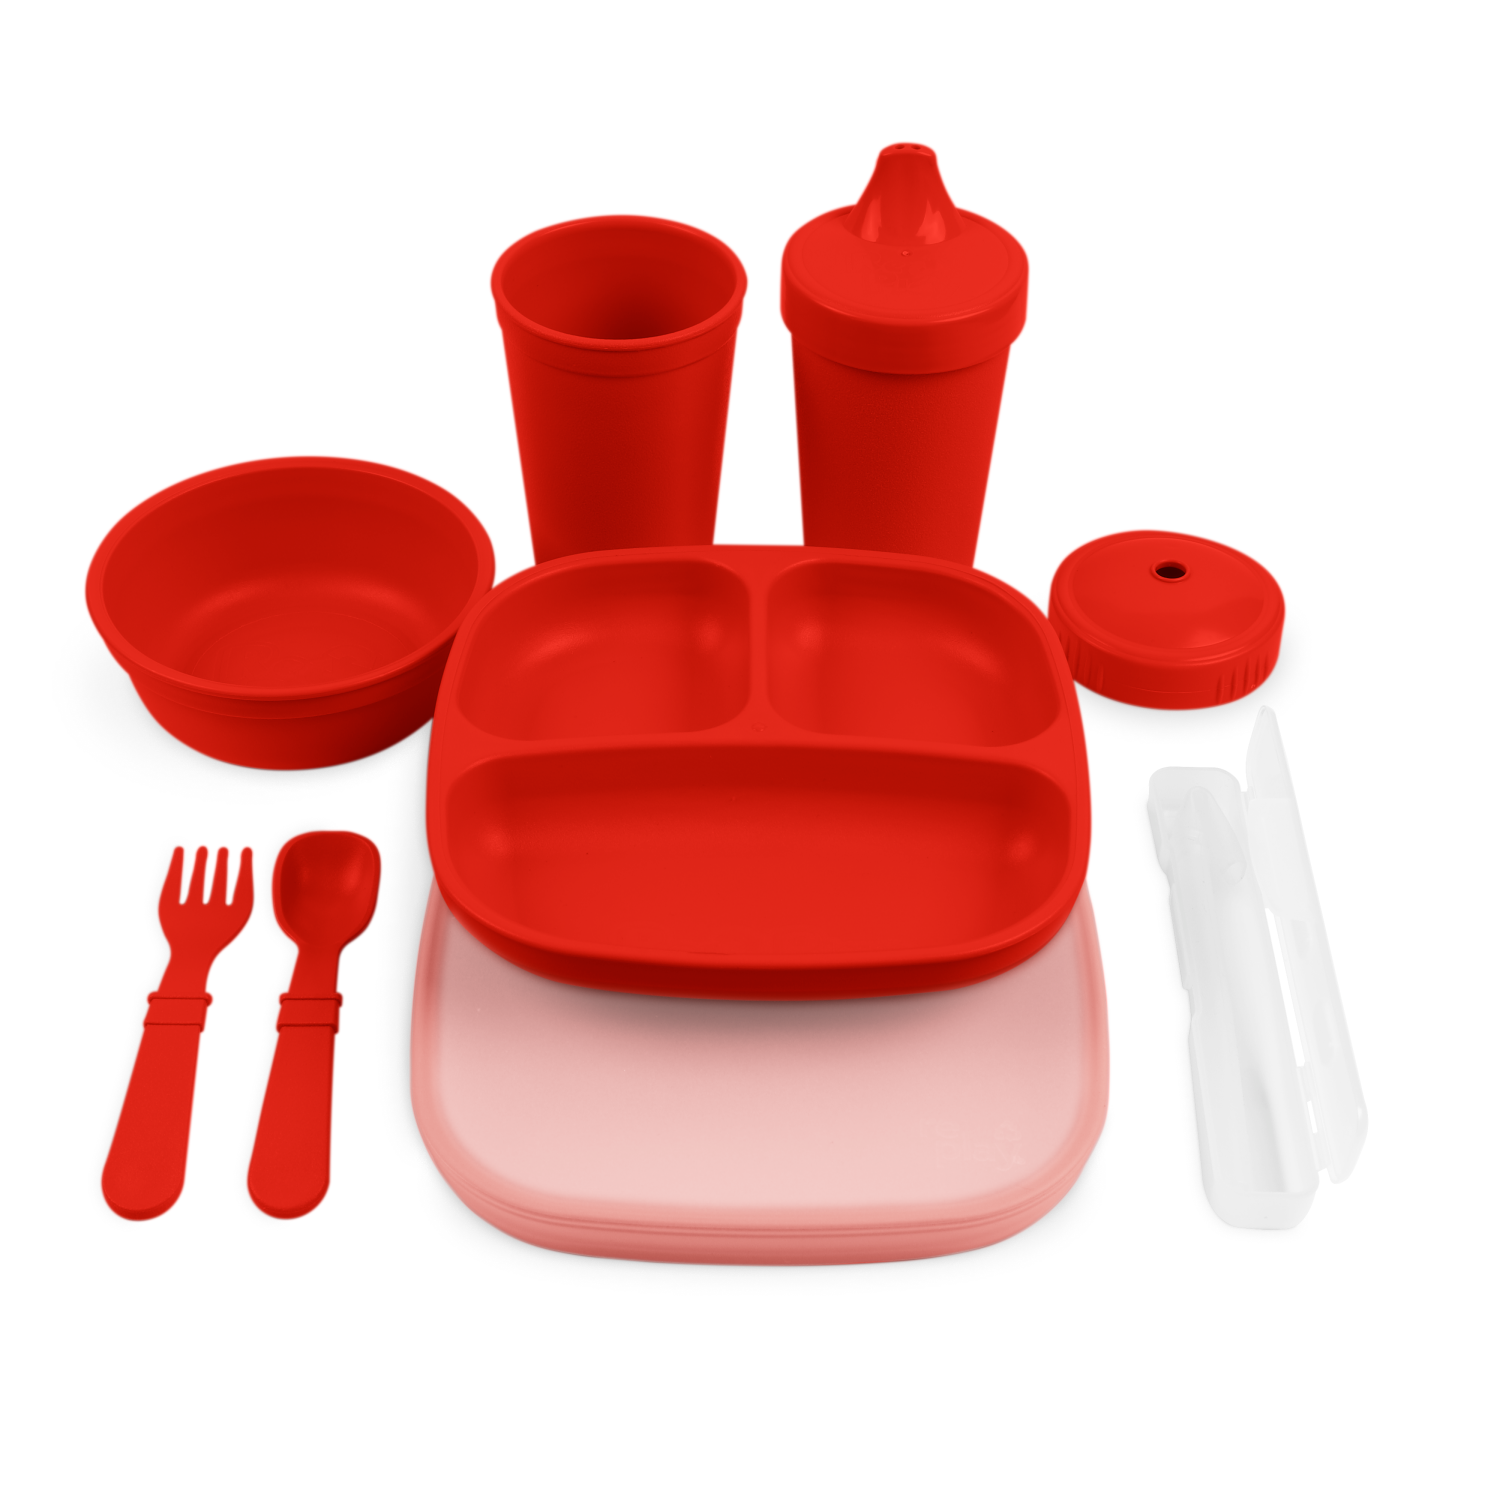 Children's Tableware Set